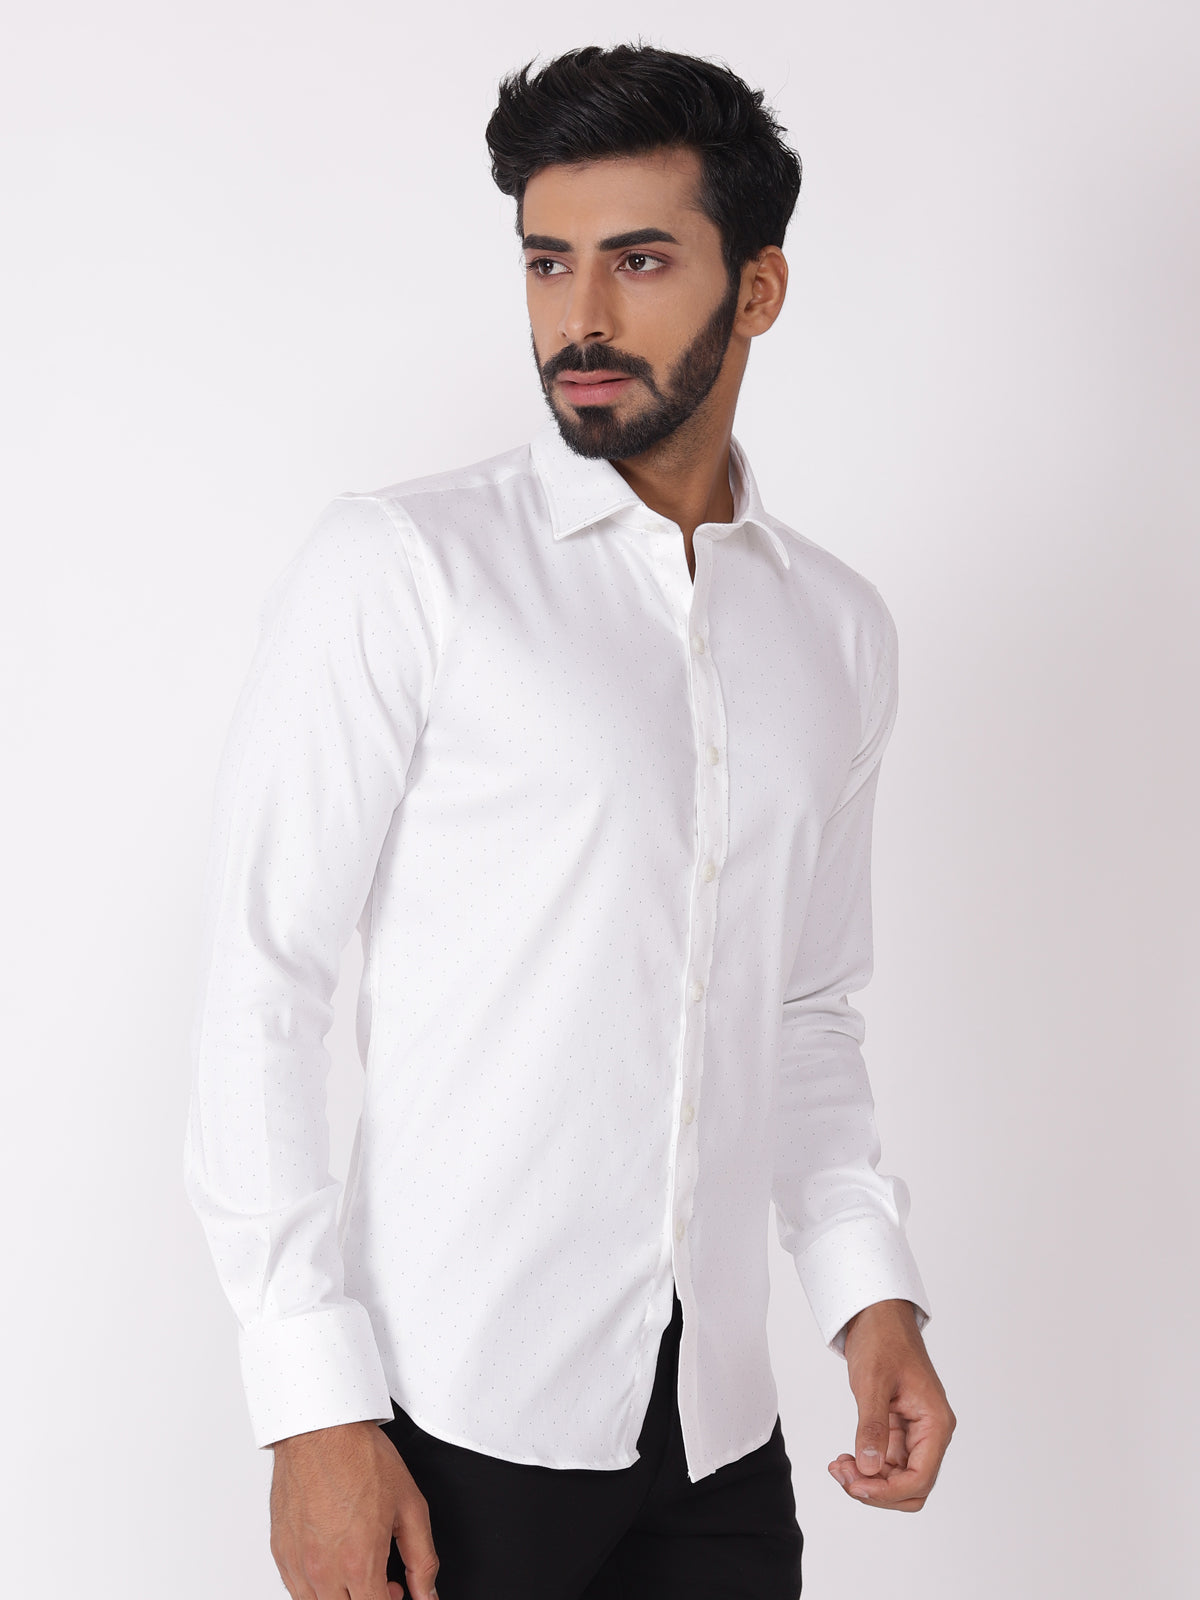 Premium white formal shirt